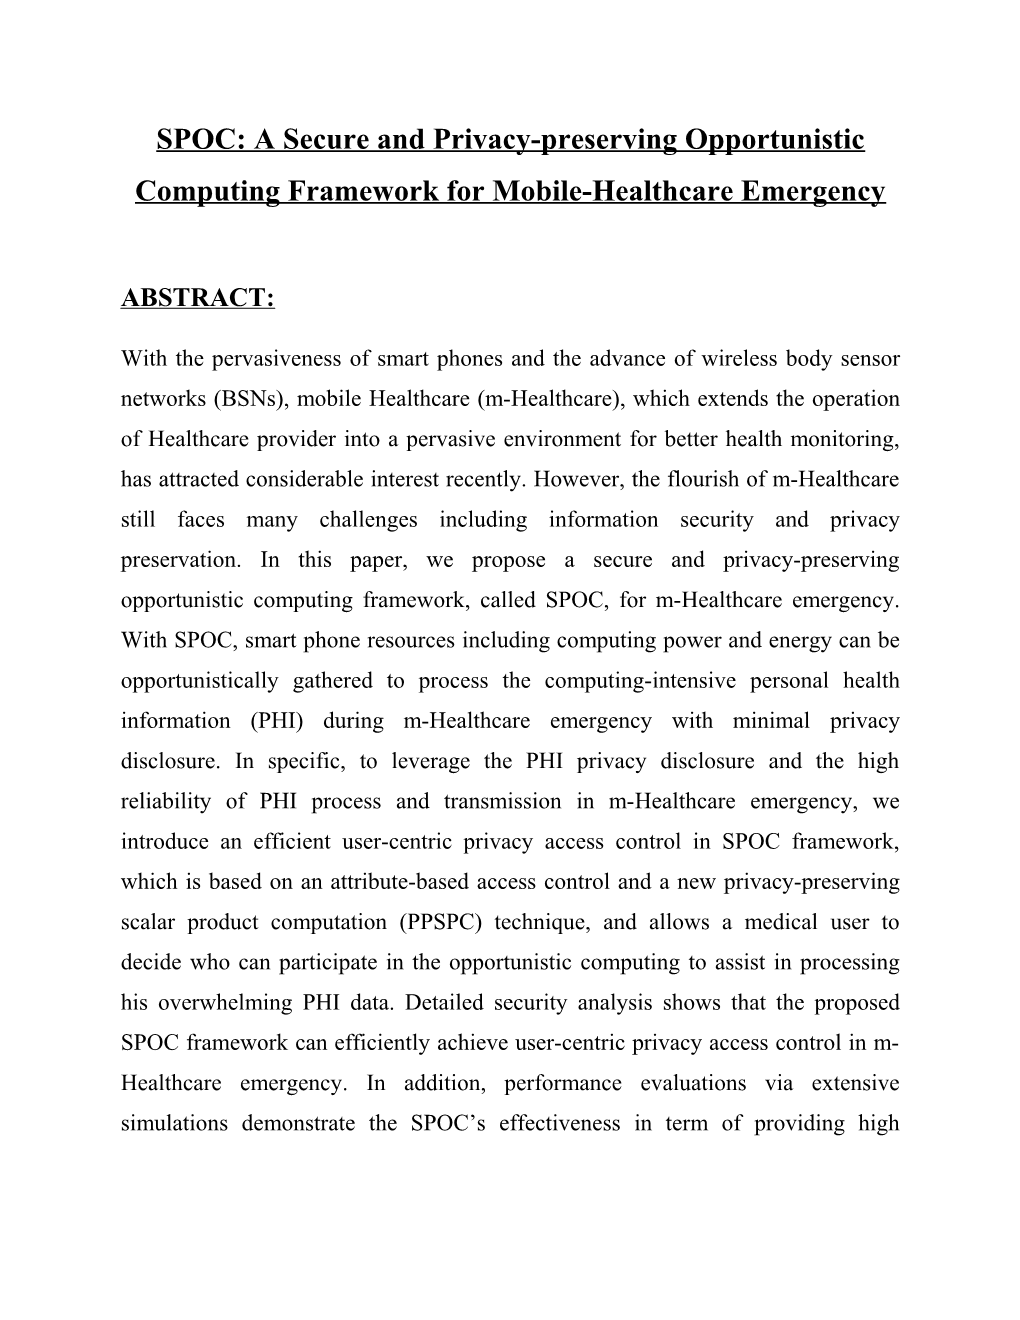 SPOC: a Secure and Privacy-Preservingopportunistic Computing Framework Formobile-Healthcare